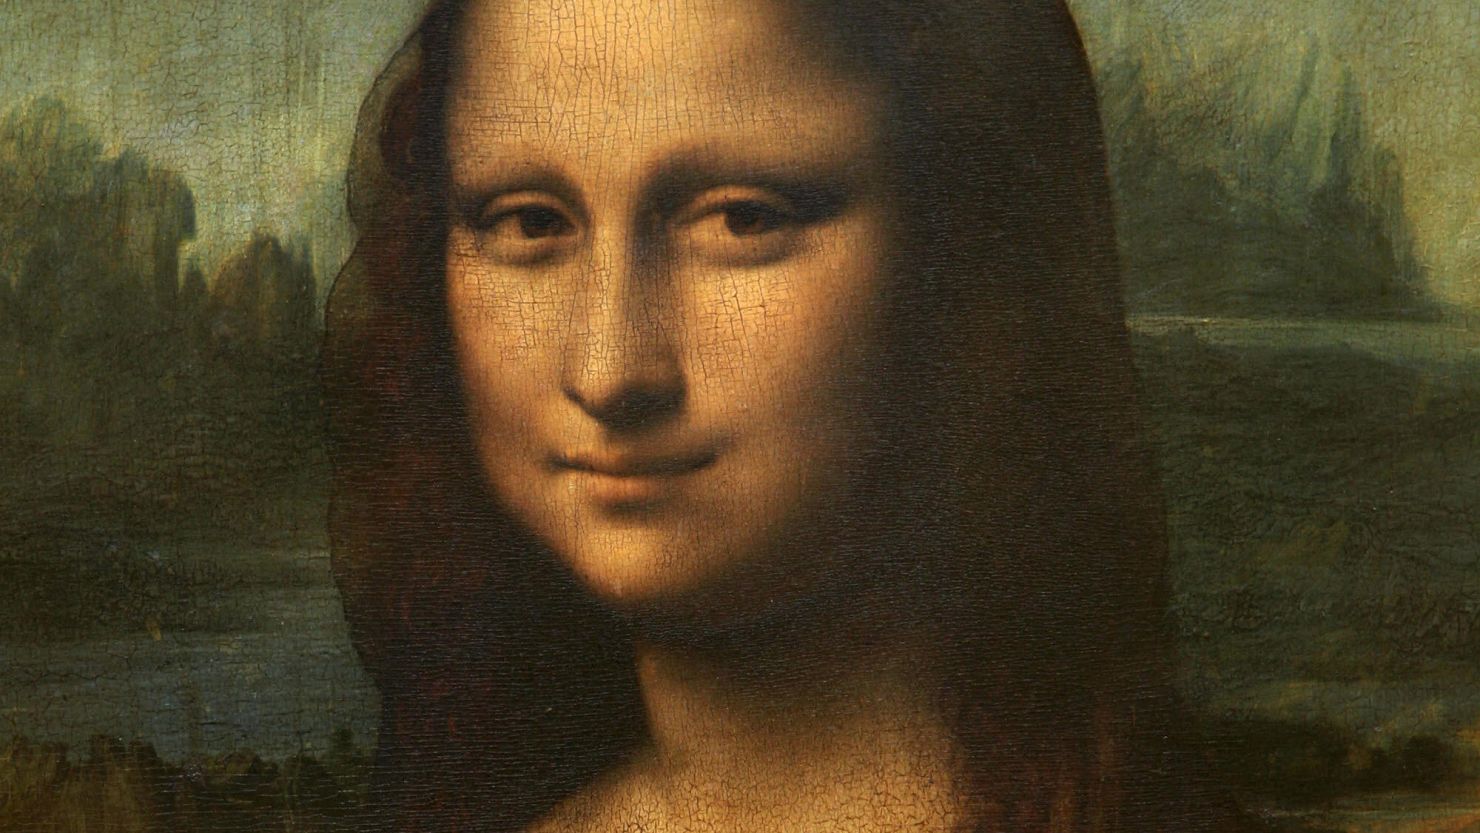 Leonardo da Vinci's "Mona Lisa" portrait hangs in the Louvre museum in Paris, France.